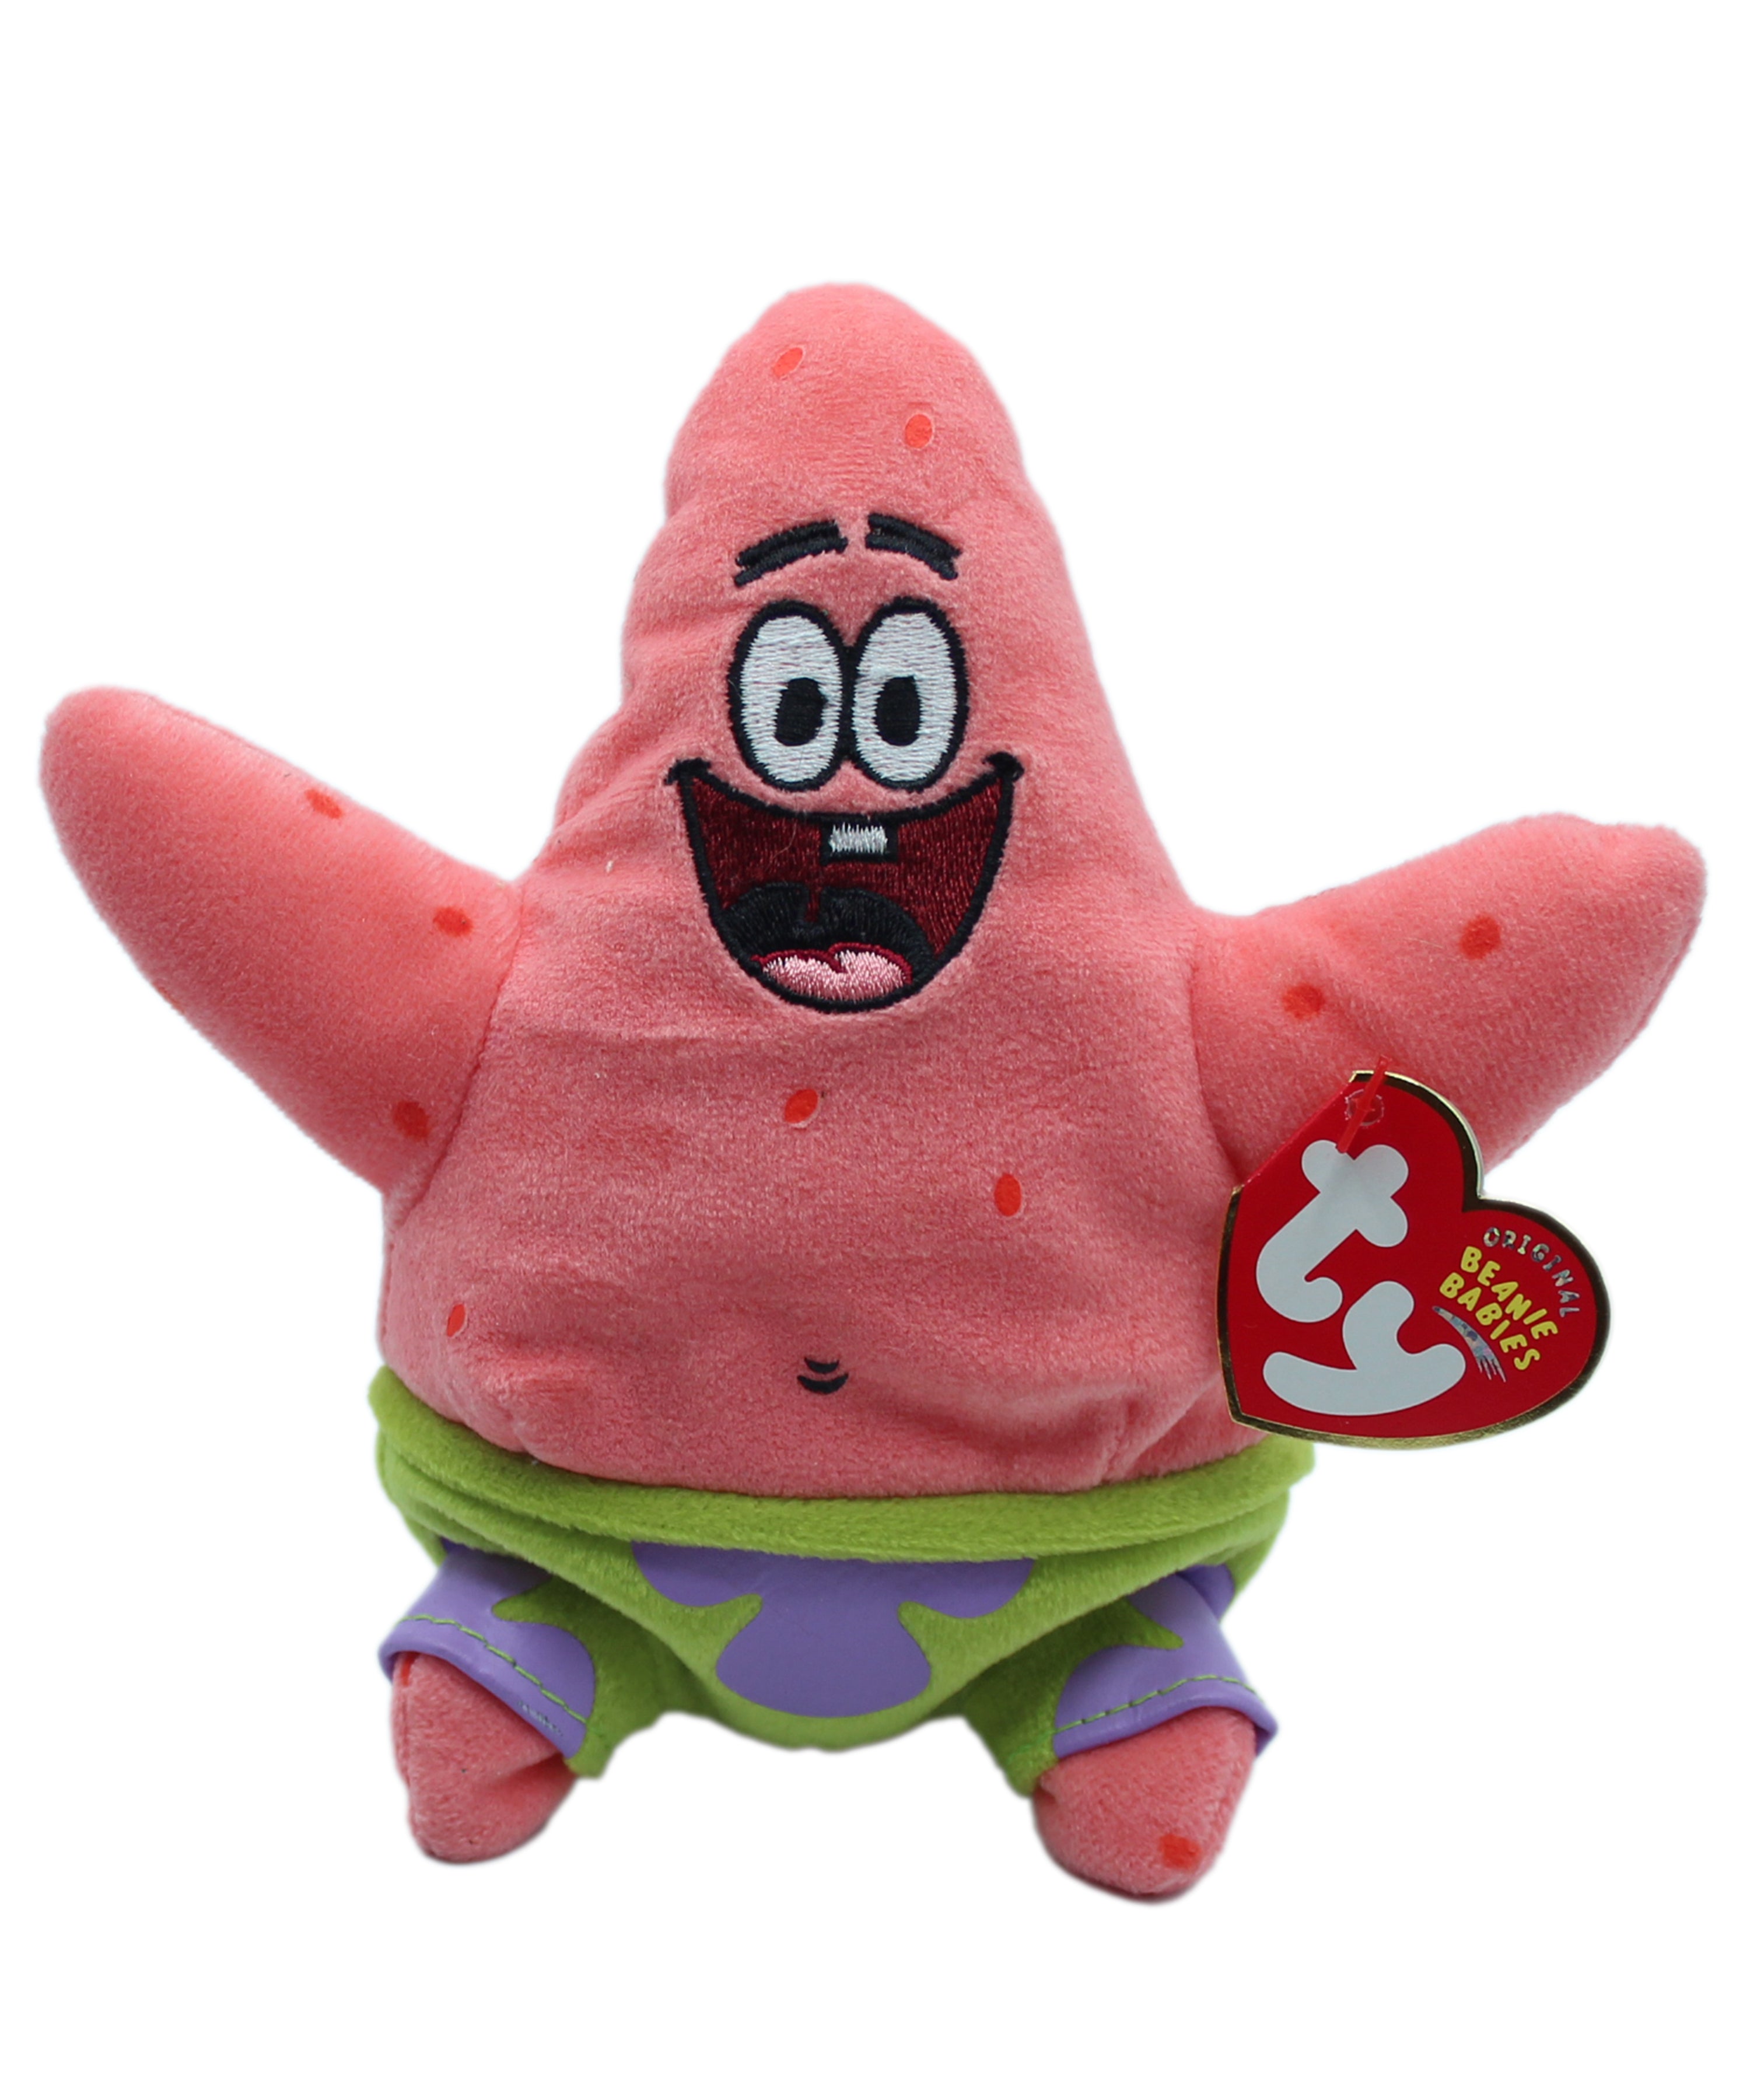 spongebob baby patrick